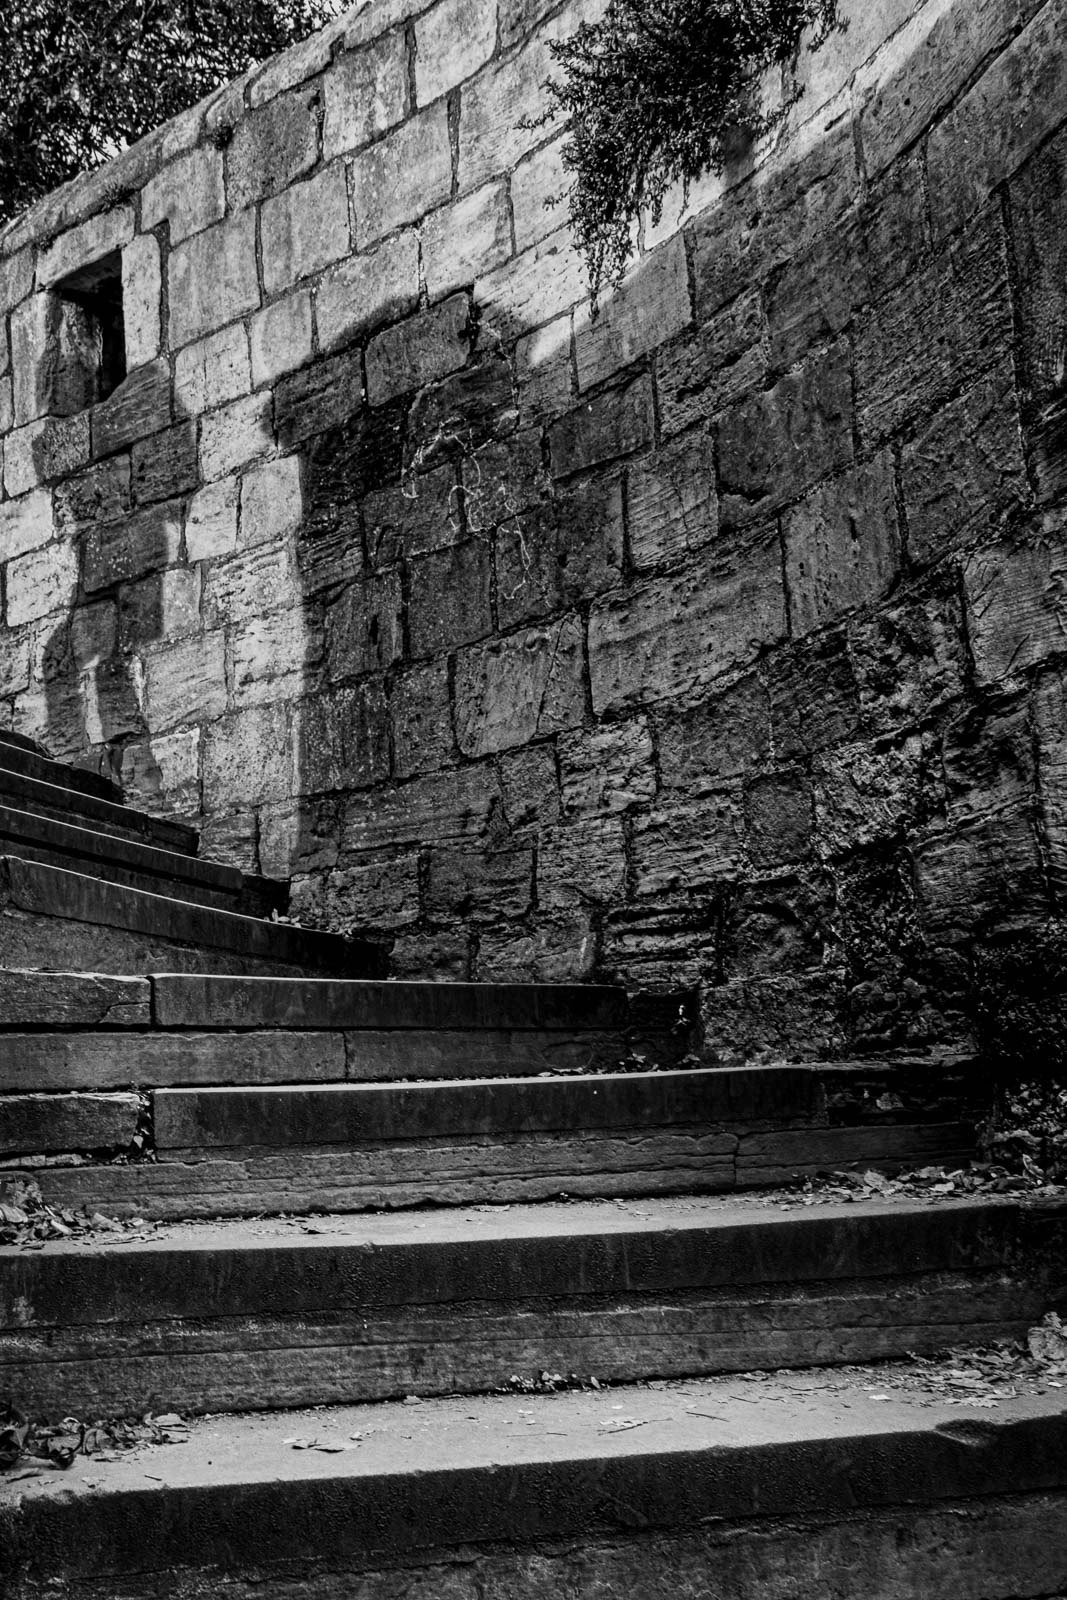 Shadows & steps, Bryan Torrington